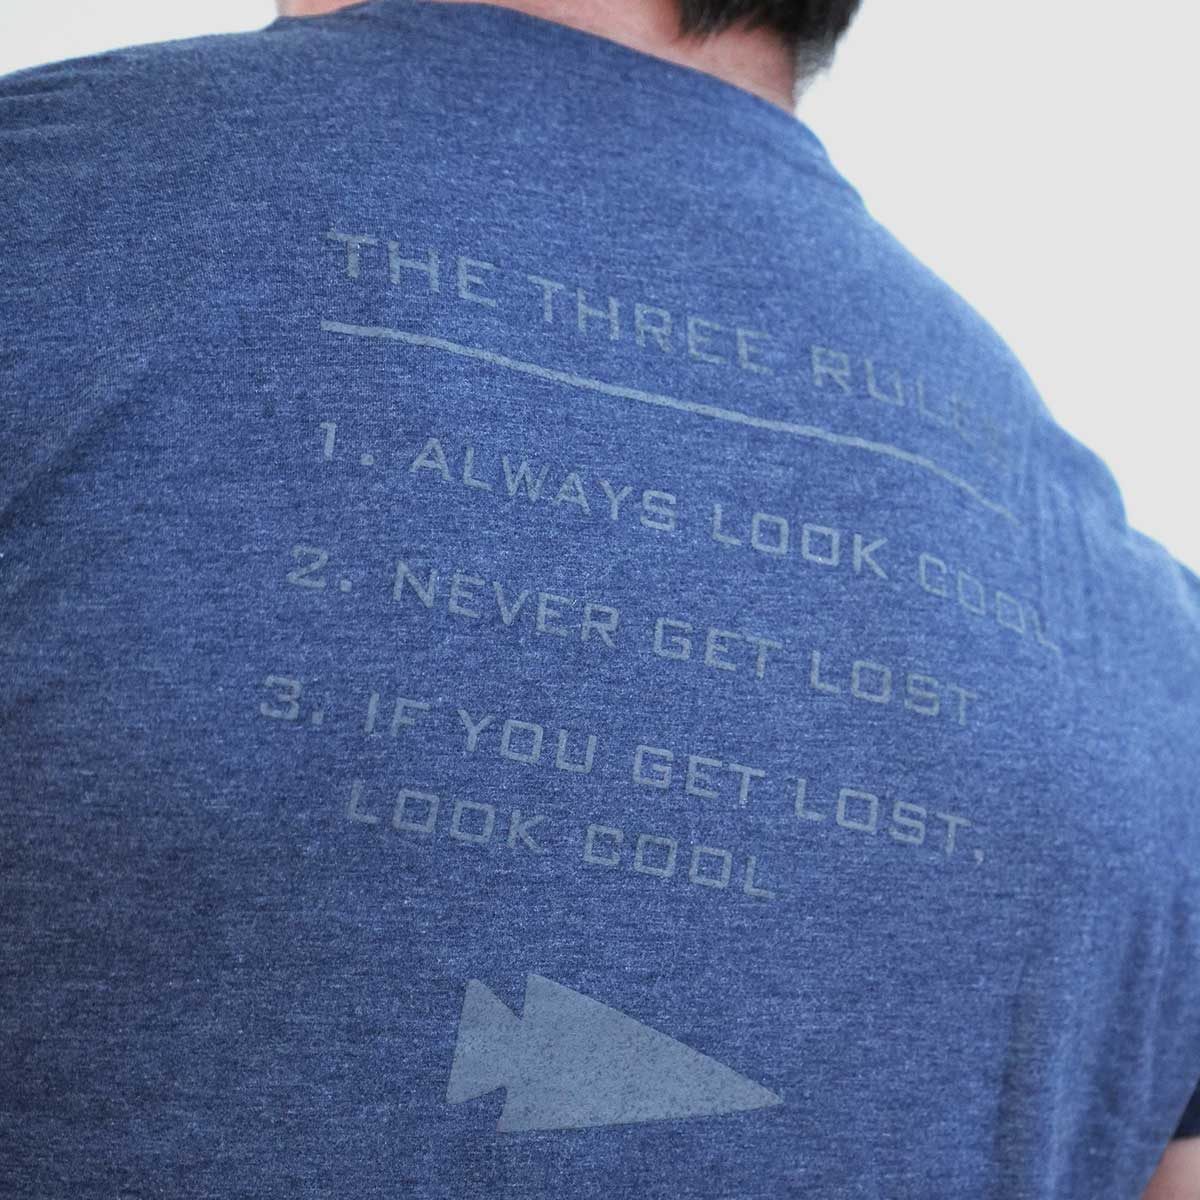 T-shirt - The Three Rules